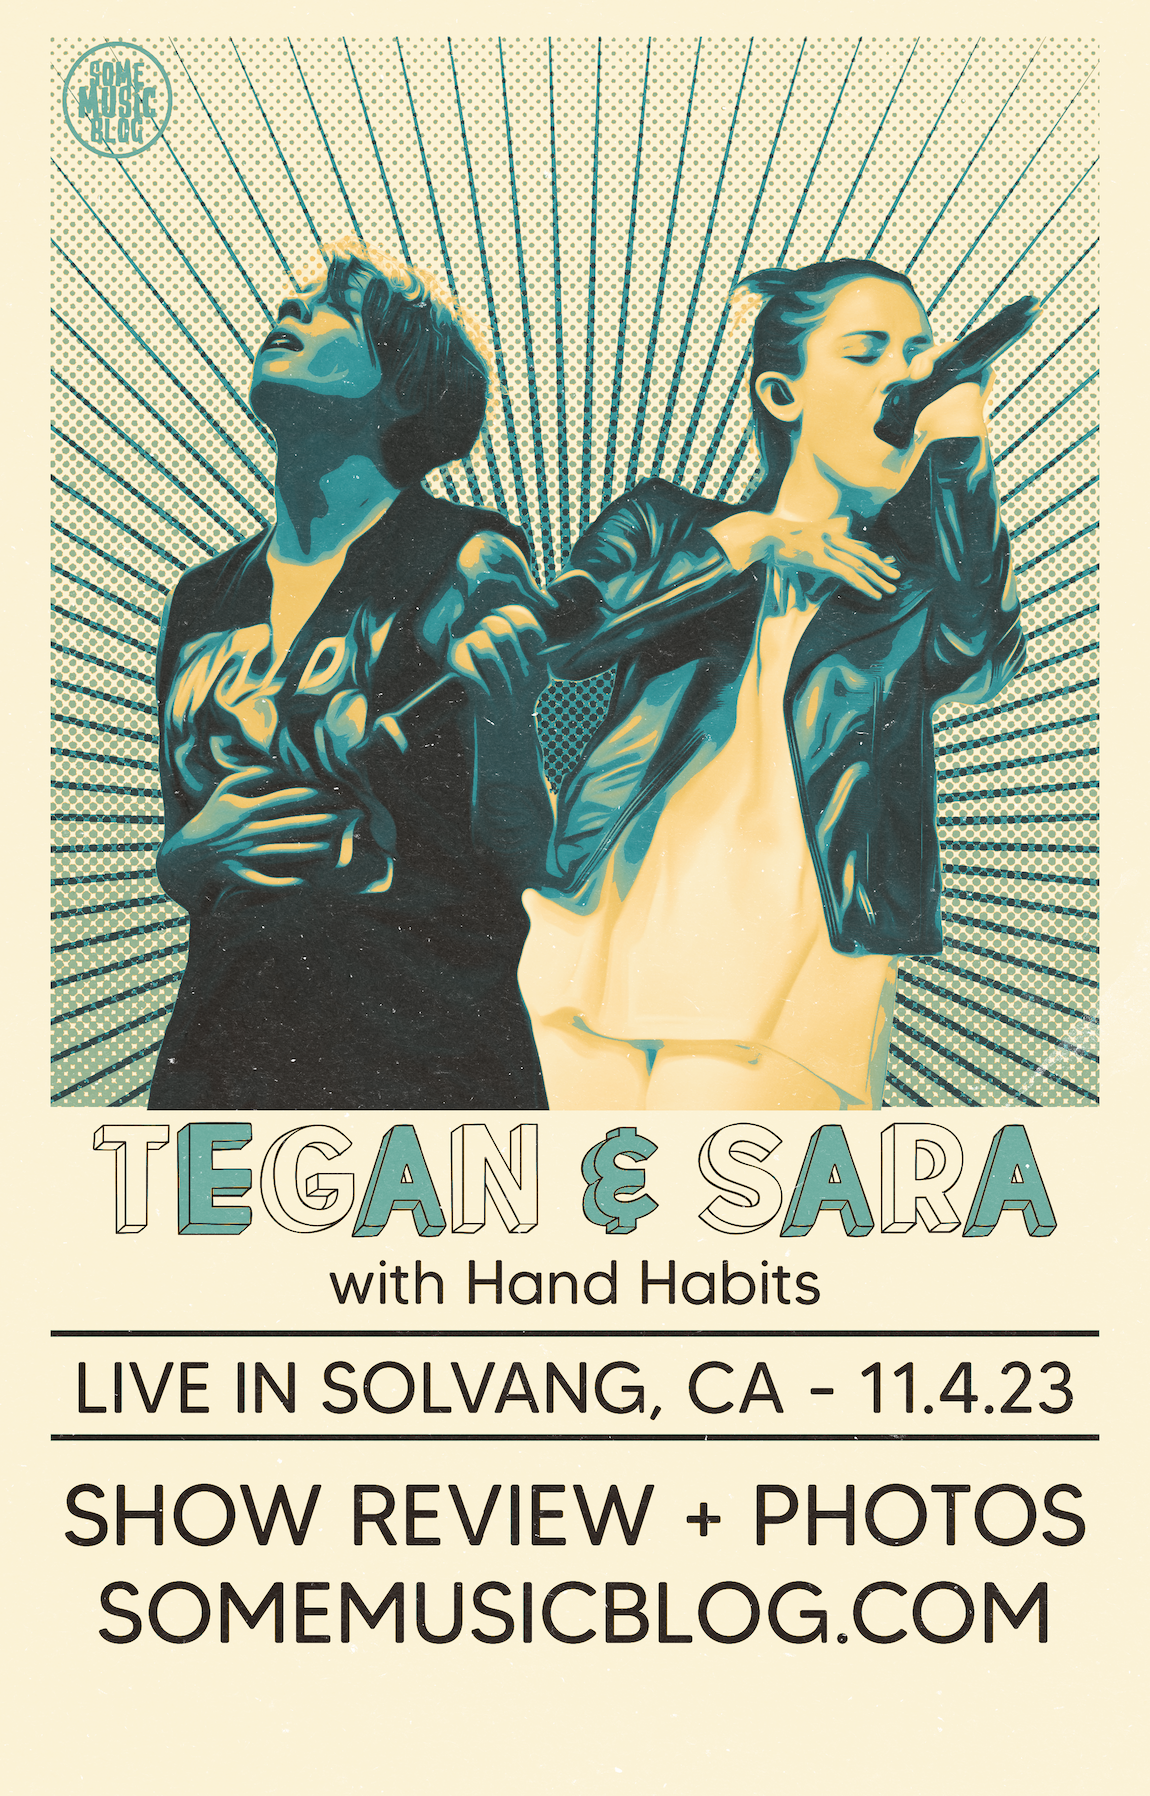 Tegan and Sara and Hand Habits in Solvang, CA November 4, 2023 Live Show Review